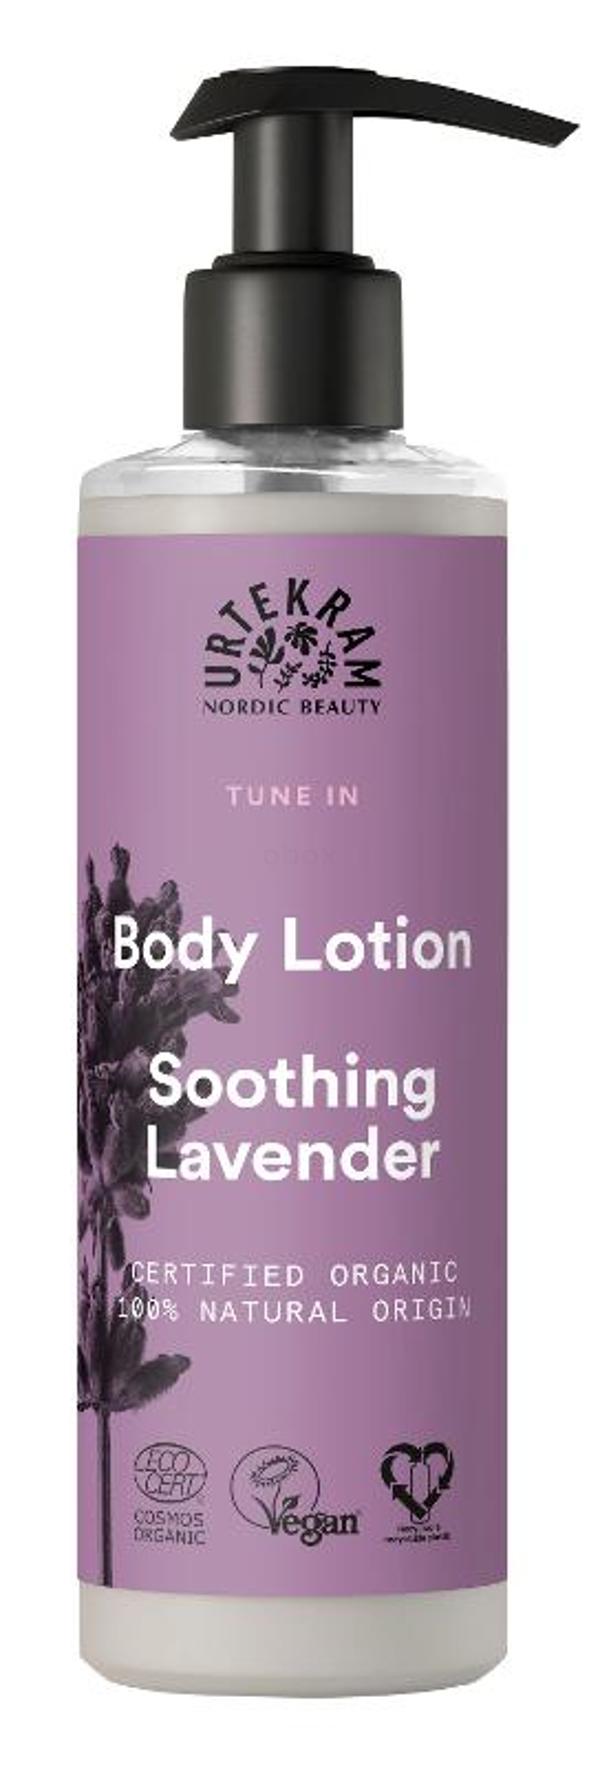 Produktfoto zu Body Lotion Soothing Lavender